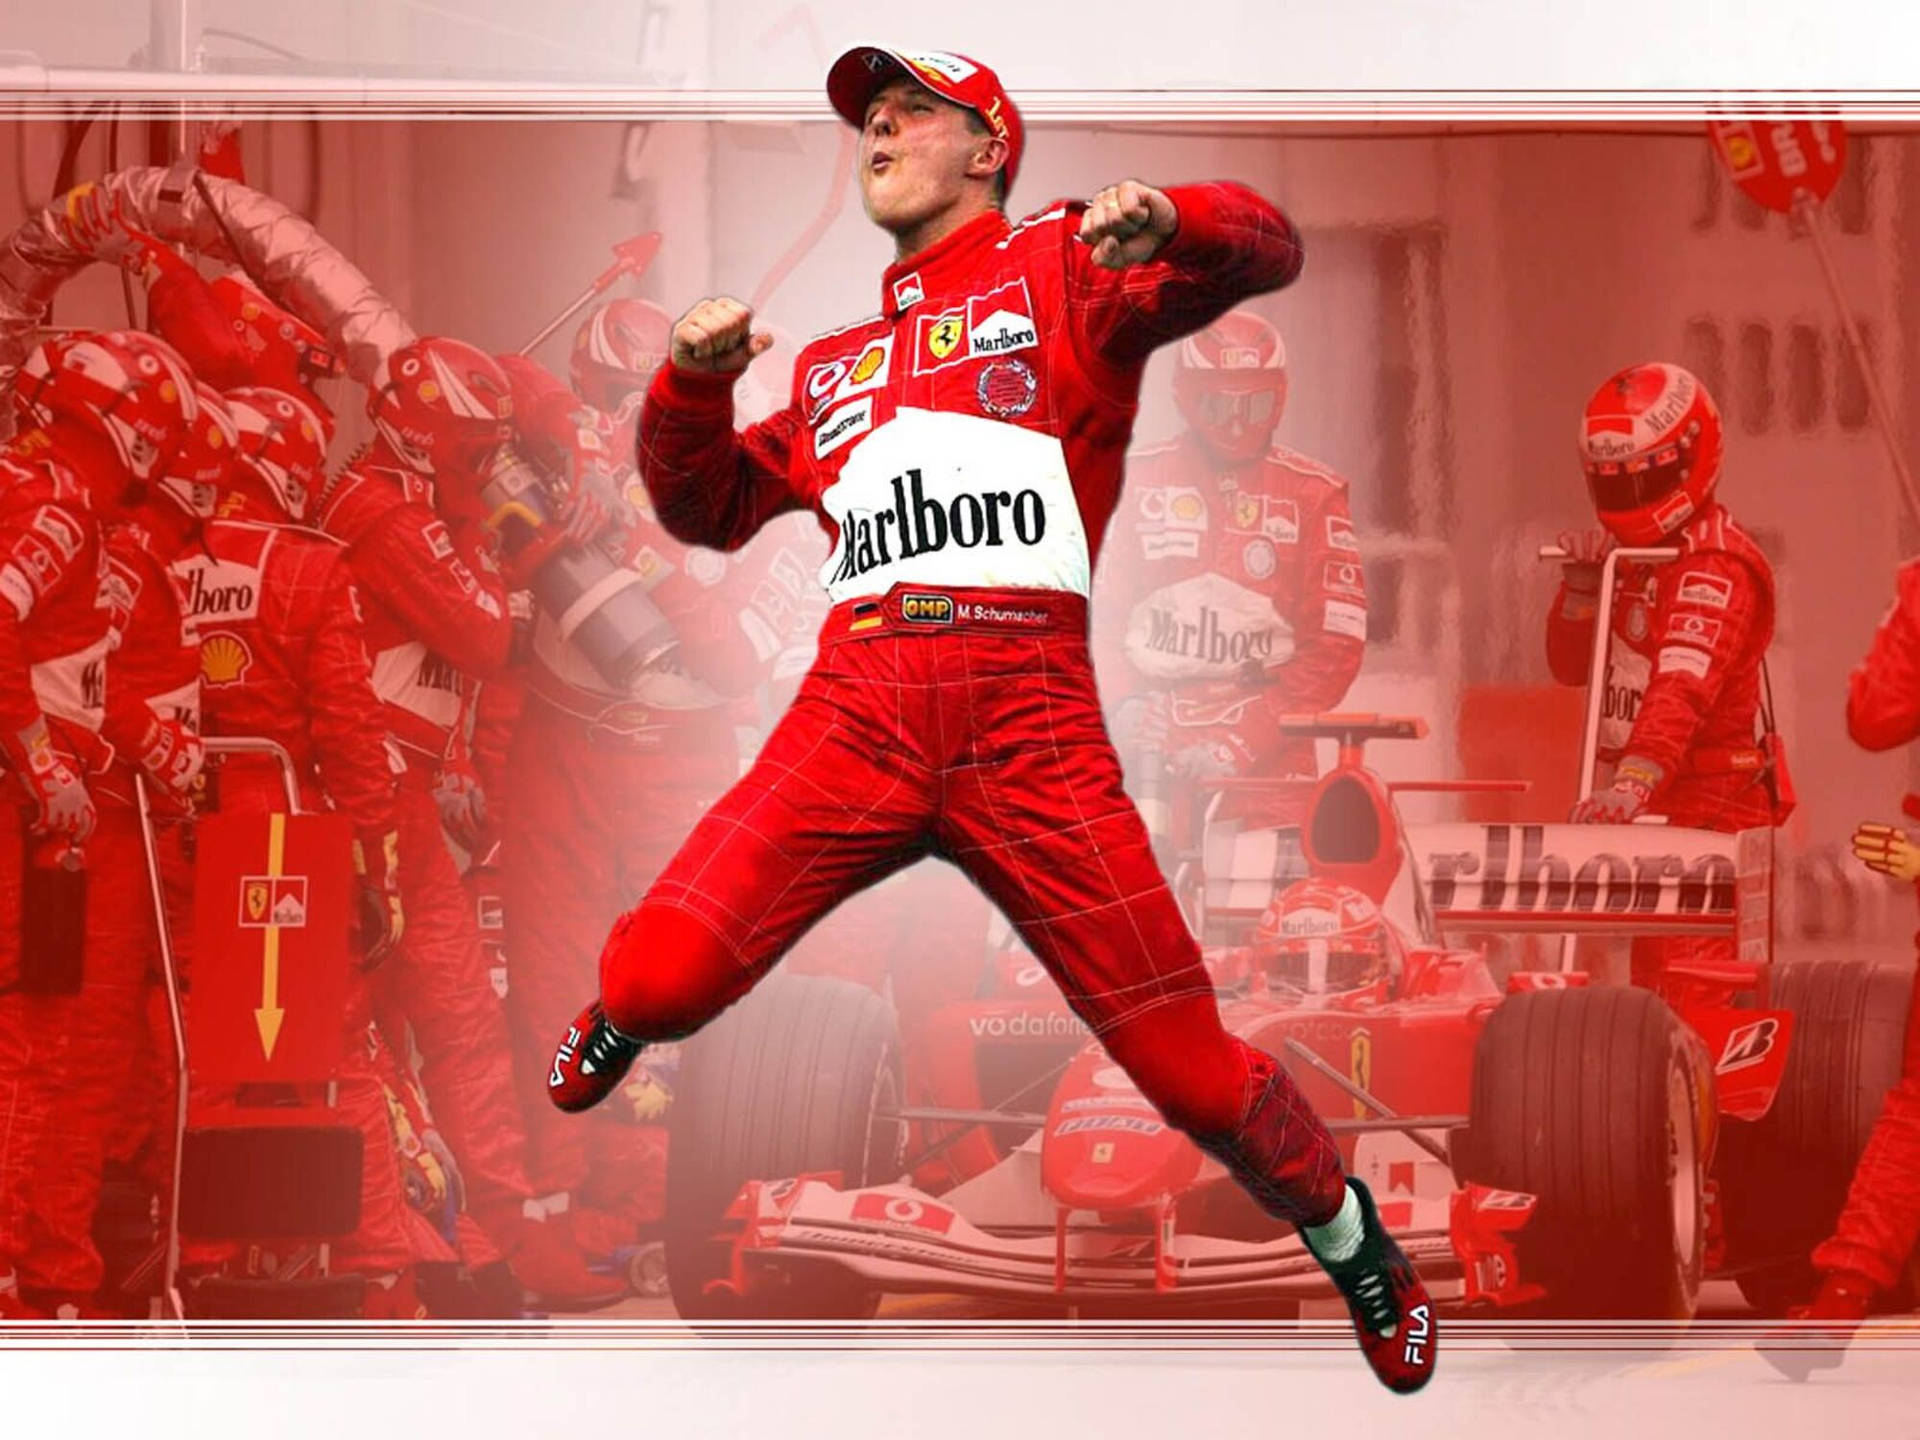 Michael Schumacher Jumping In Excitement